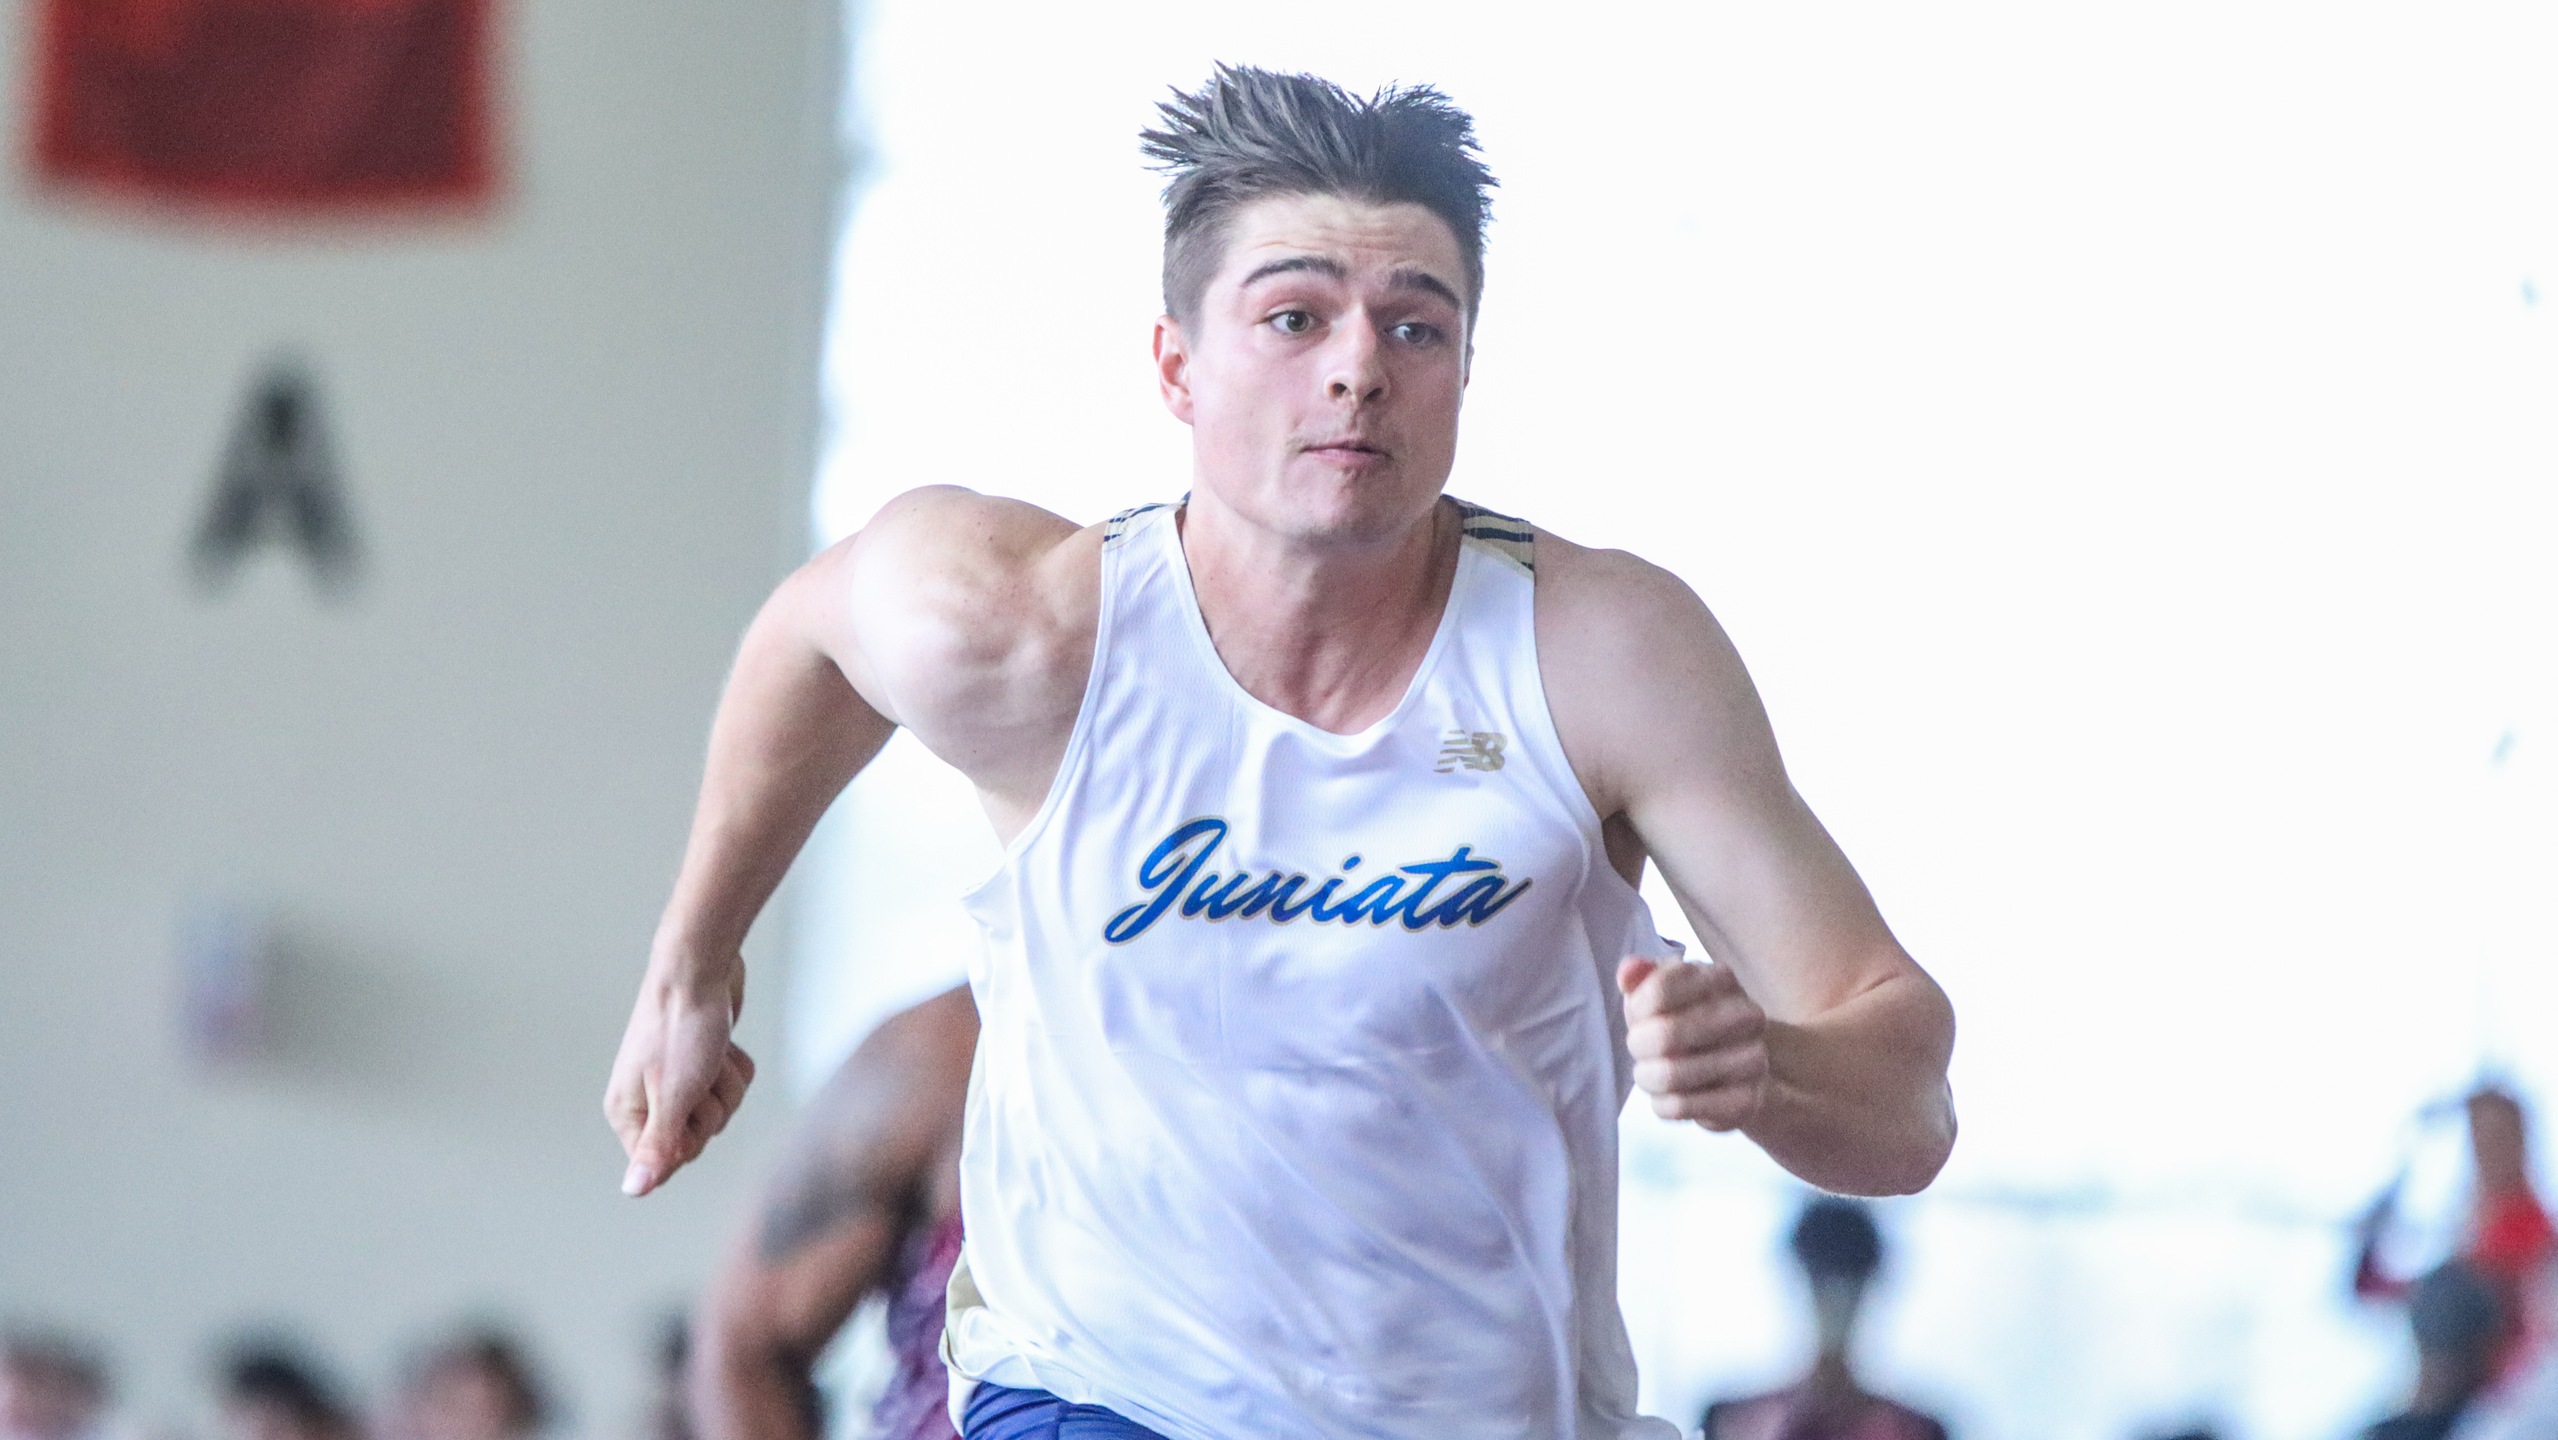 Lewis Sets Juniata's Third-Best 60 Meter Time at Moravian Indoor Meet